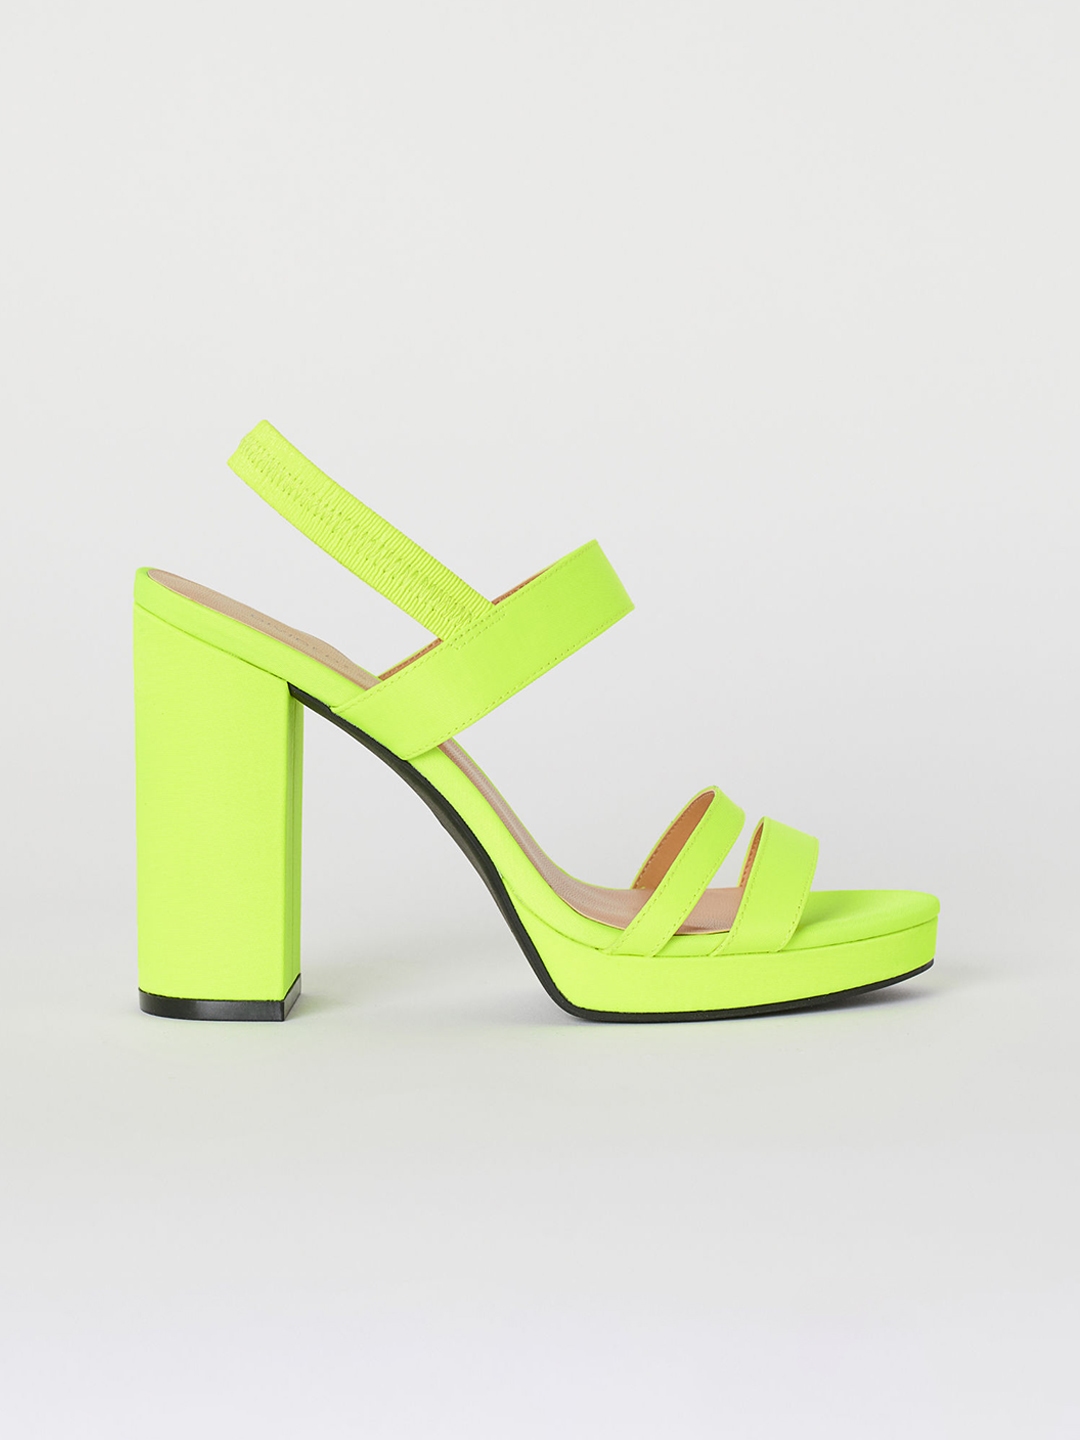 fluorescent green heels